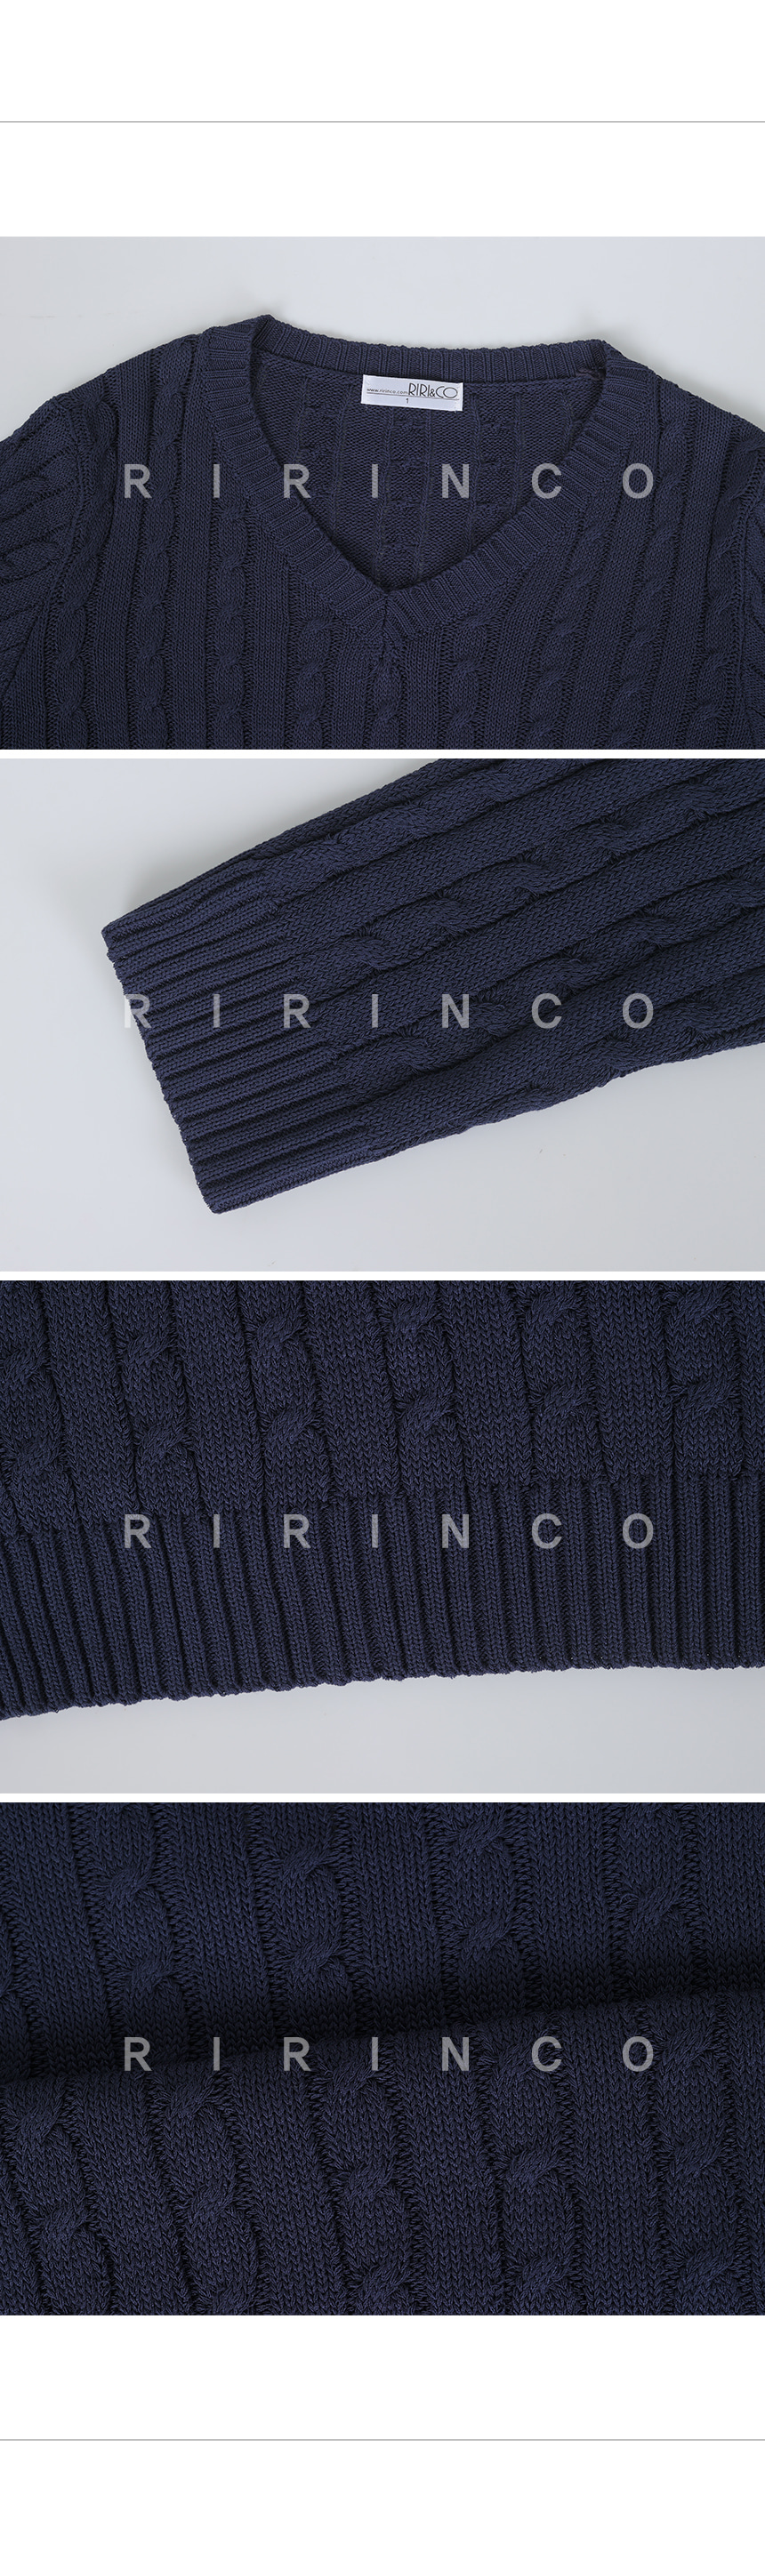 RIRINCO Ⅴネックケーブル編み長袖ニット